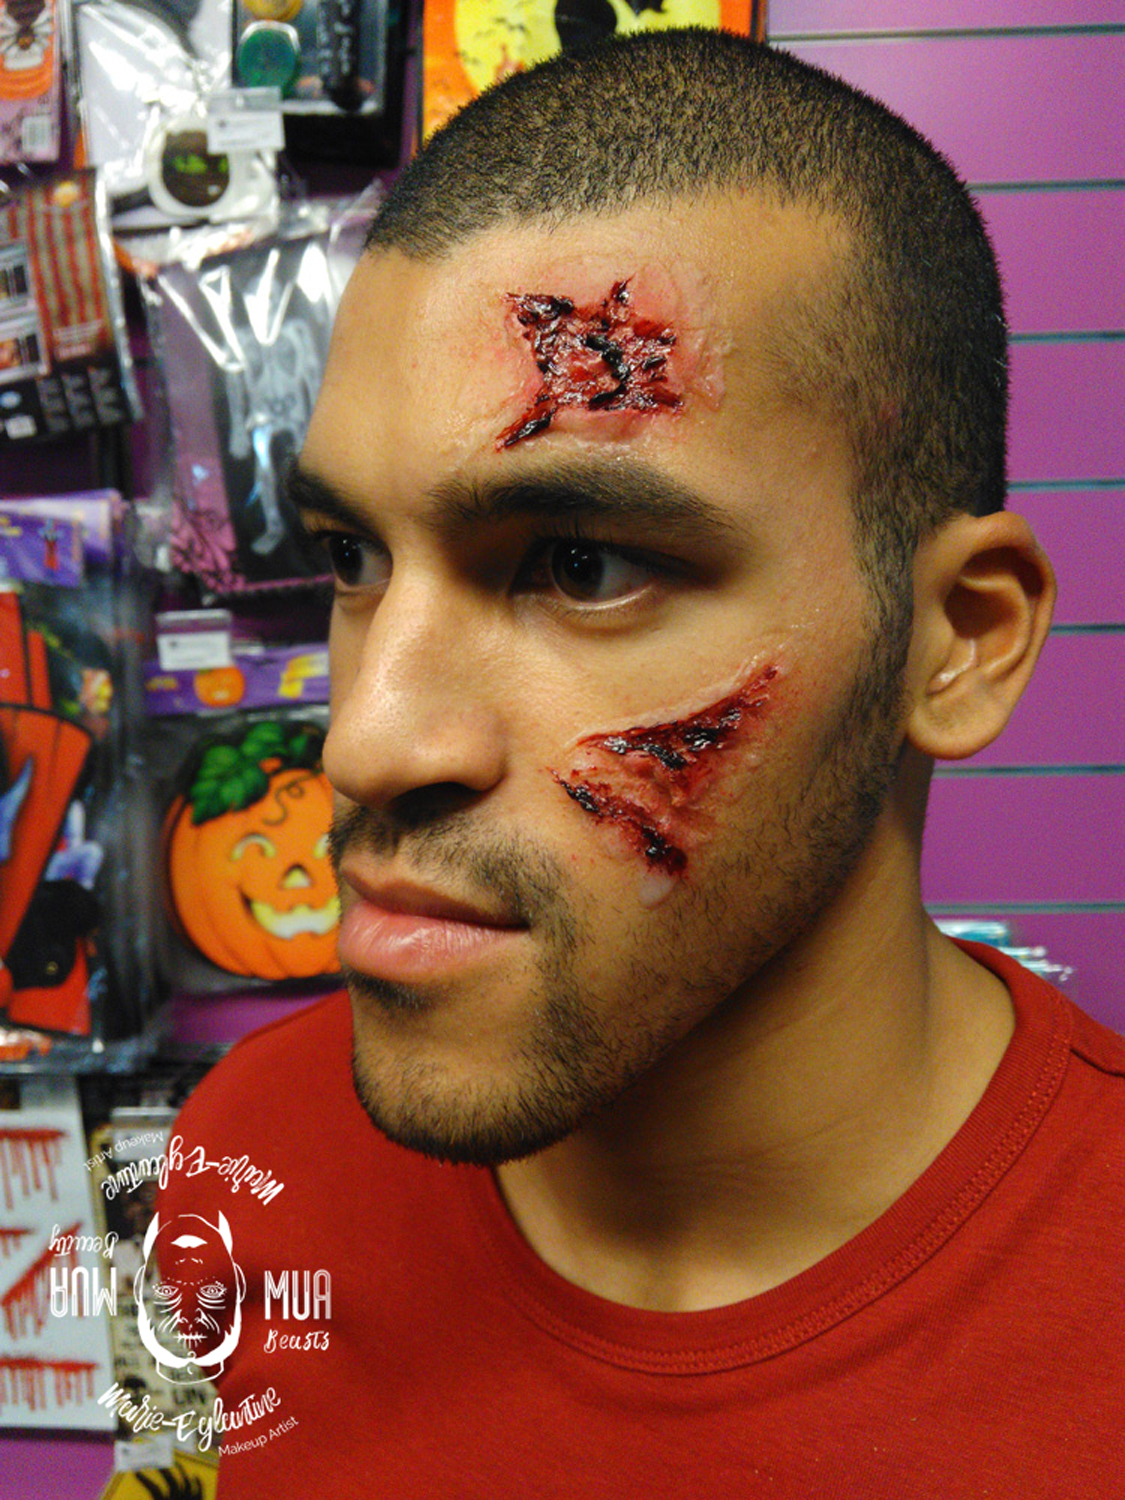 Makeup Halloween fake wound